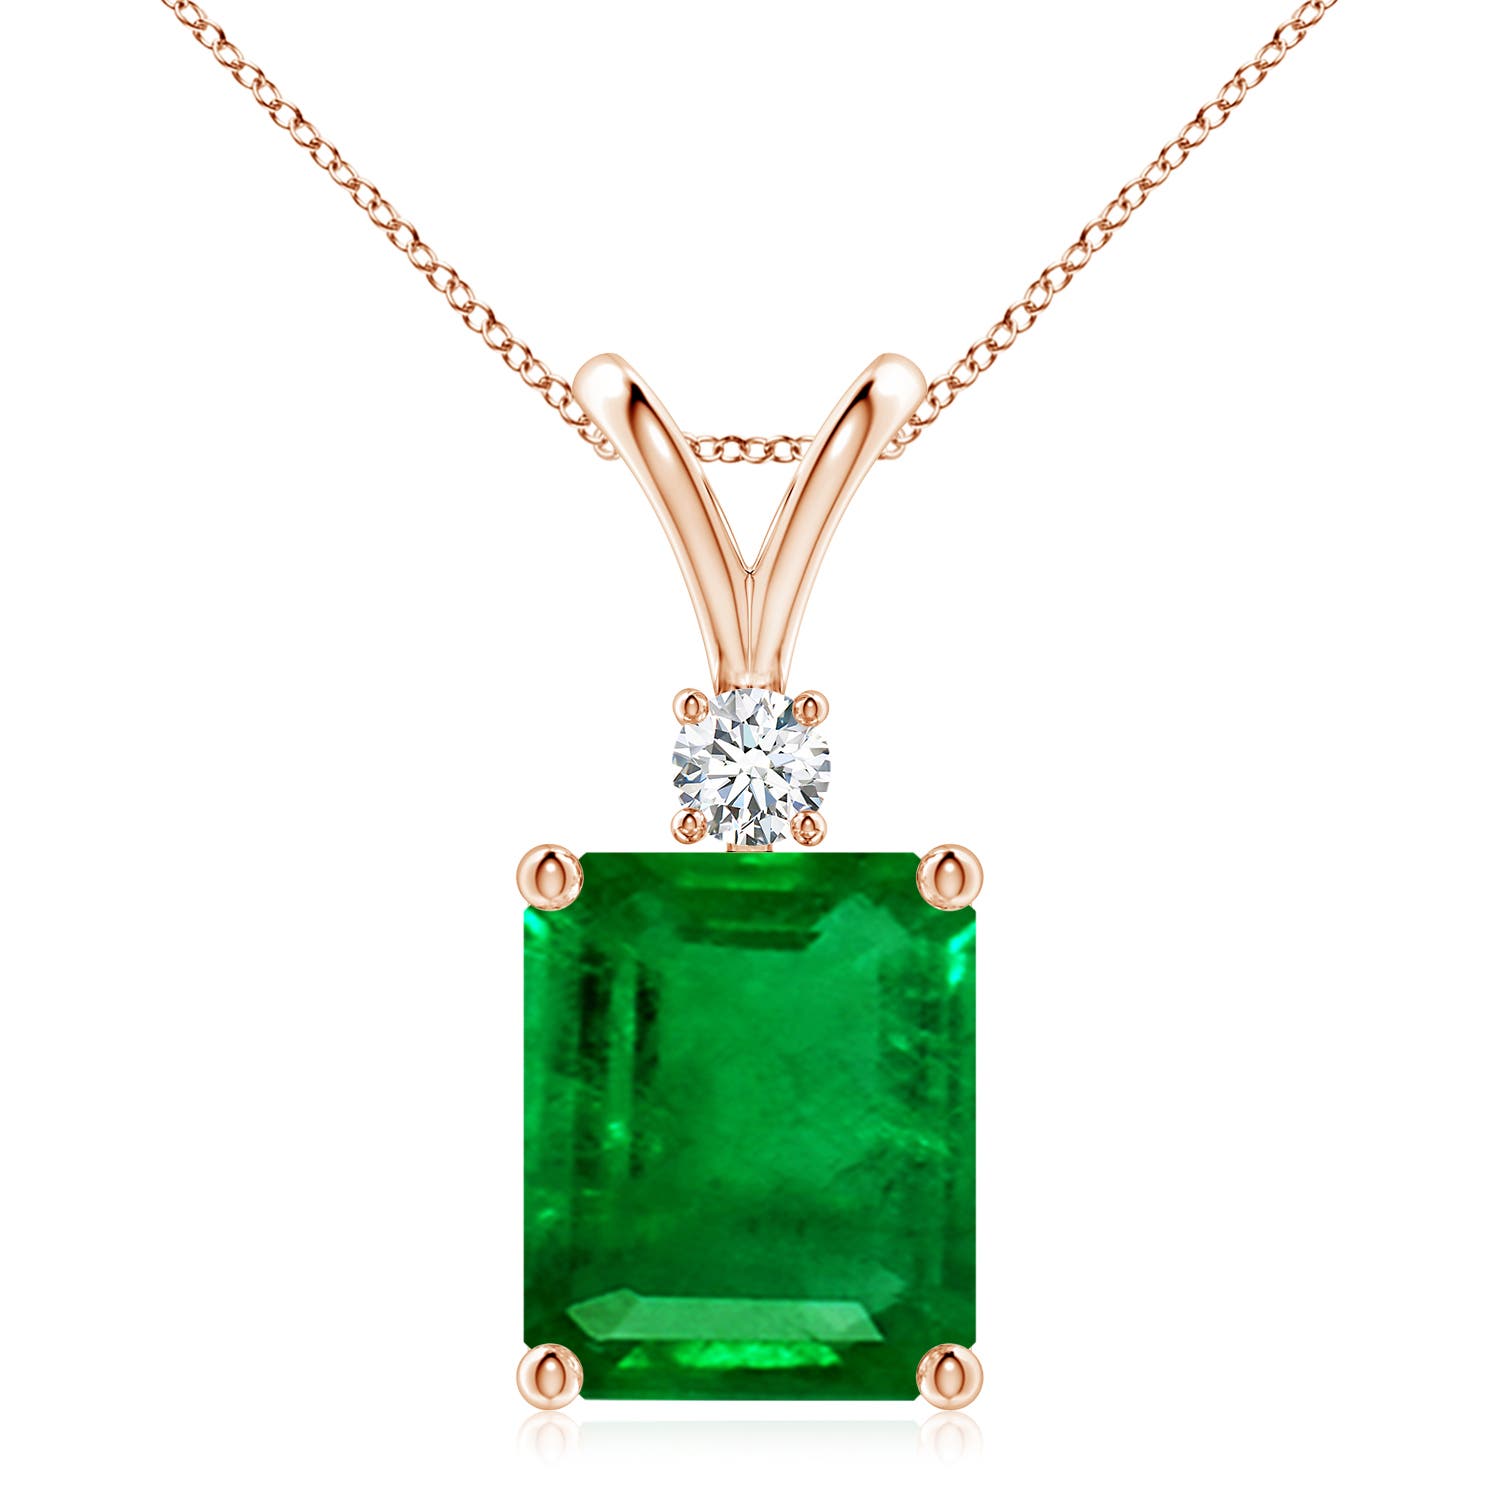 AAAA - Emerald / 5.91 CT / 14 KT Rose Gold